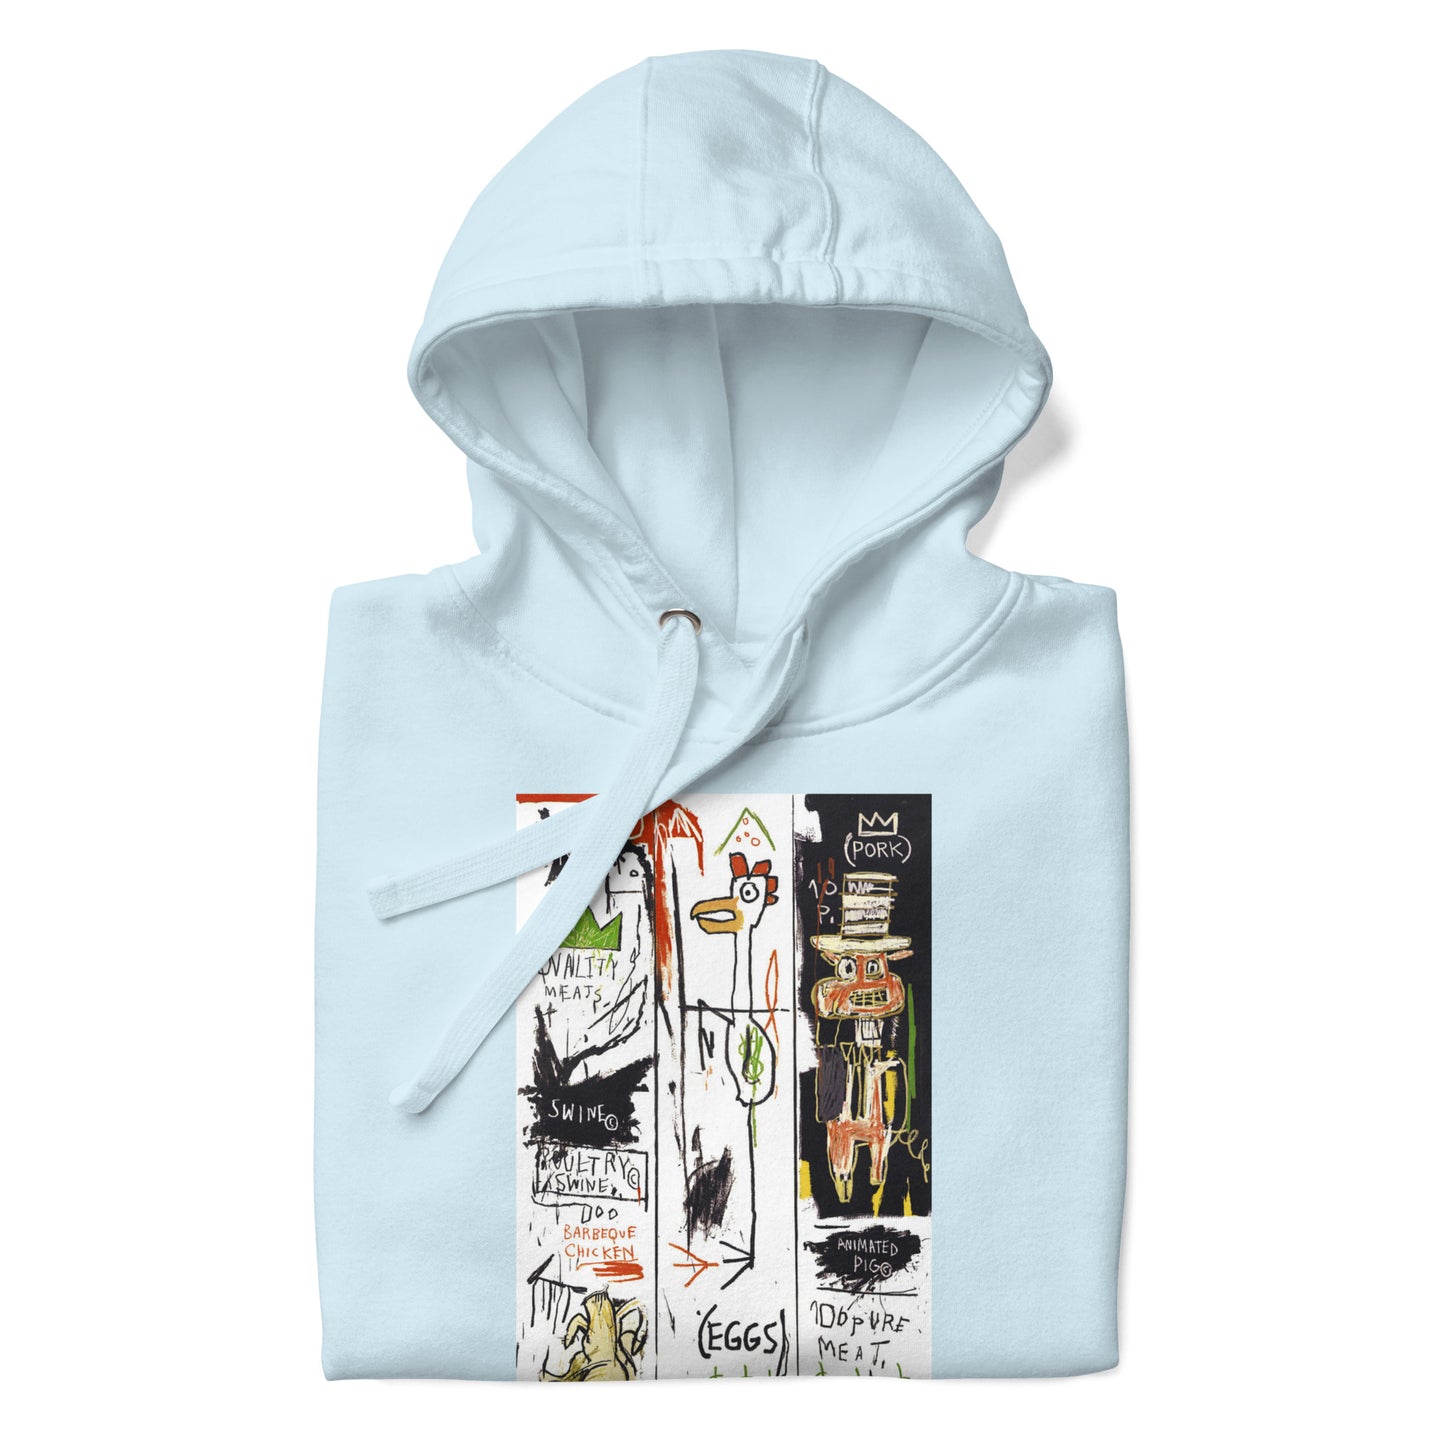 Jean-Michel Basquiat "Quality Meats for the Public" 1982 Artwork Printed Premium Streetwear Sweatshirt Hoodie Ice Blue